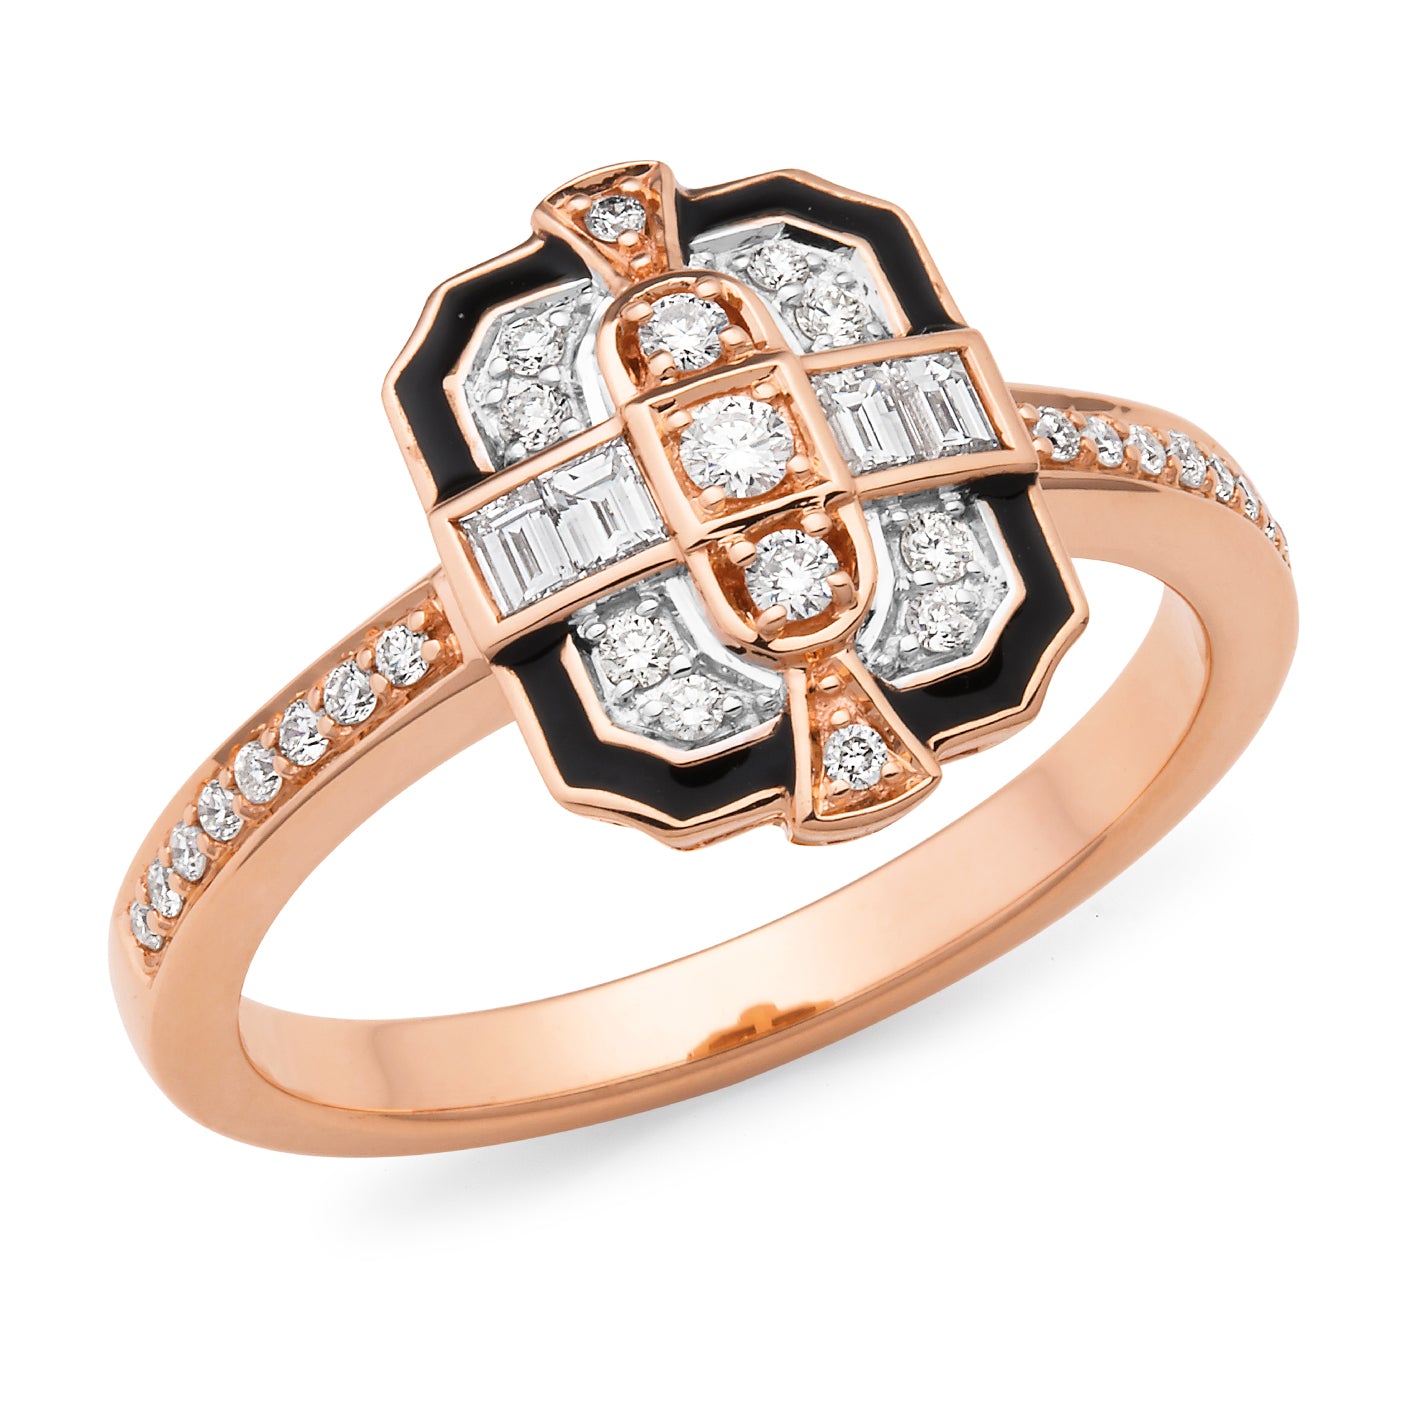 Estelle' Art Deco Style Diamond Ring in 9ct Rose Gold